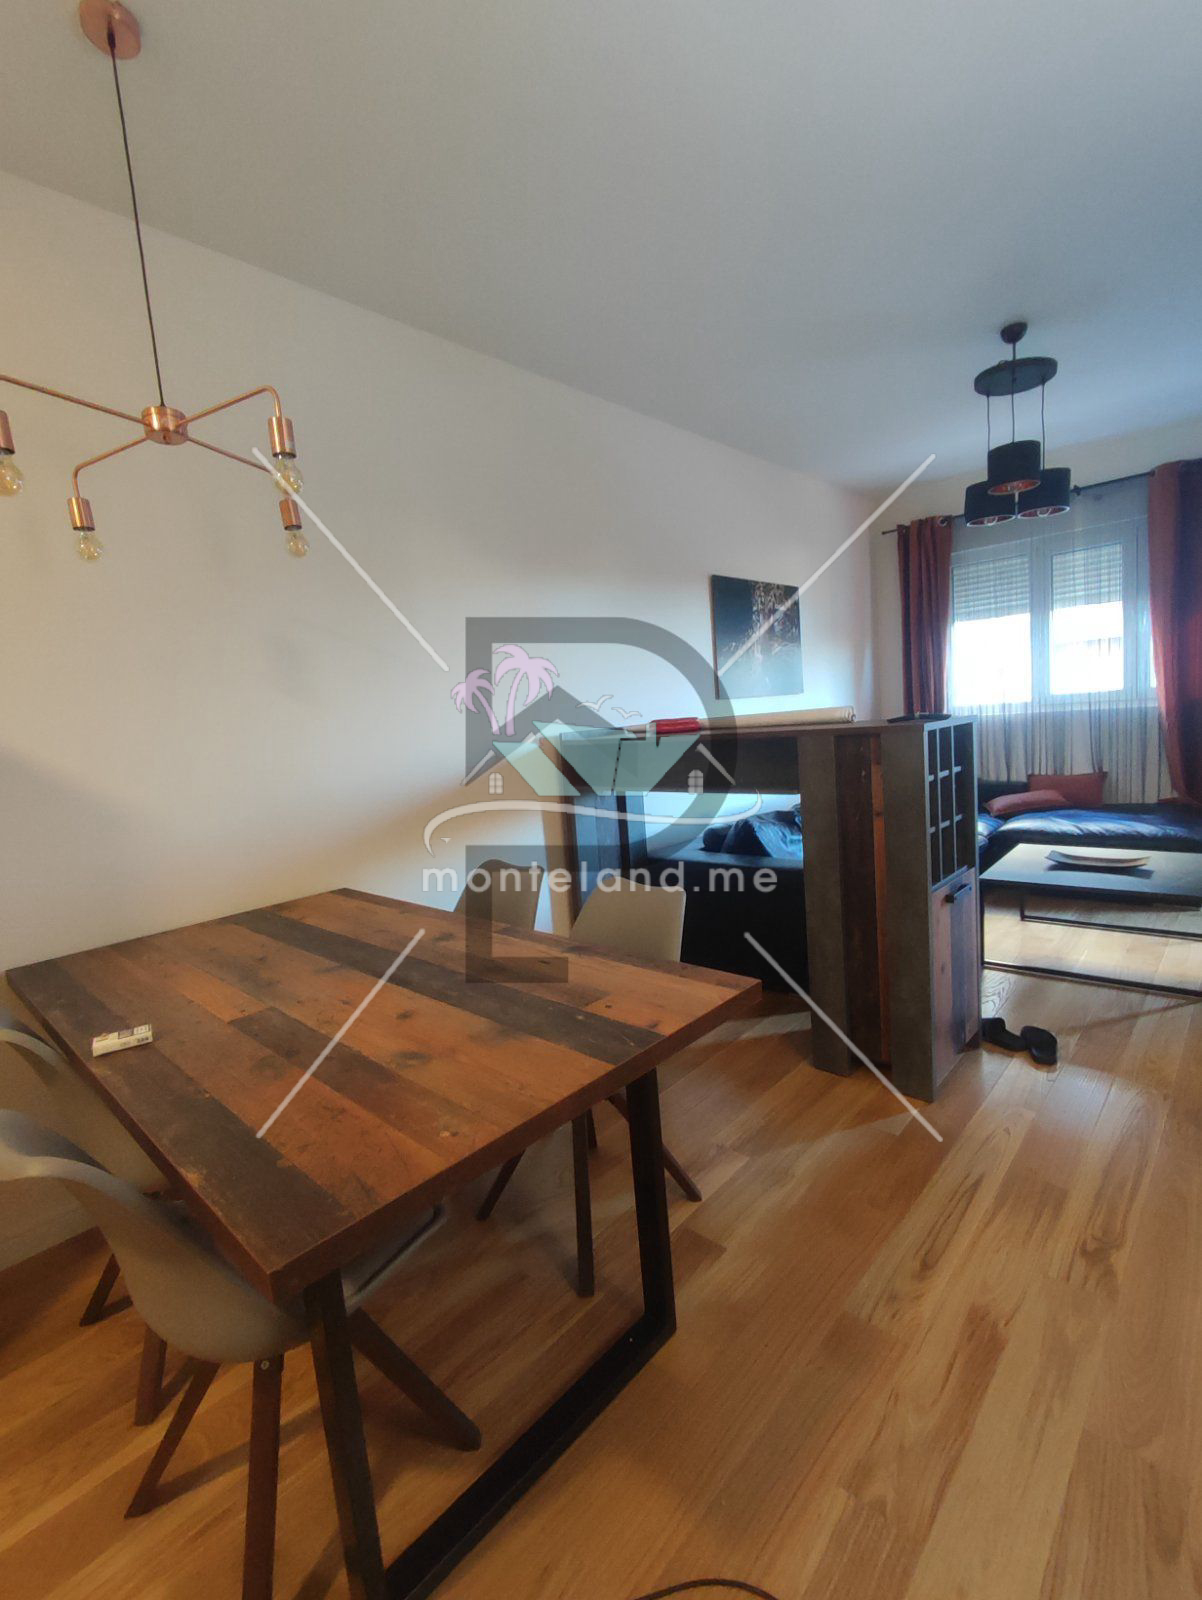 Apartment, offers sale, PODGORICA, CITY KVART-DELTA, Montenegro, 47M, Price - 110000€